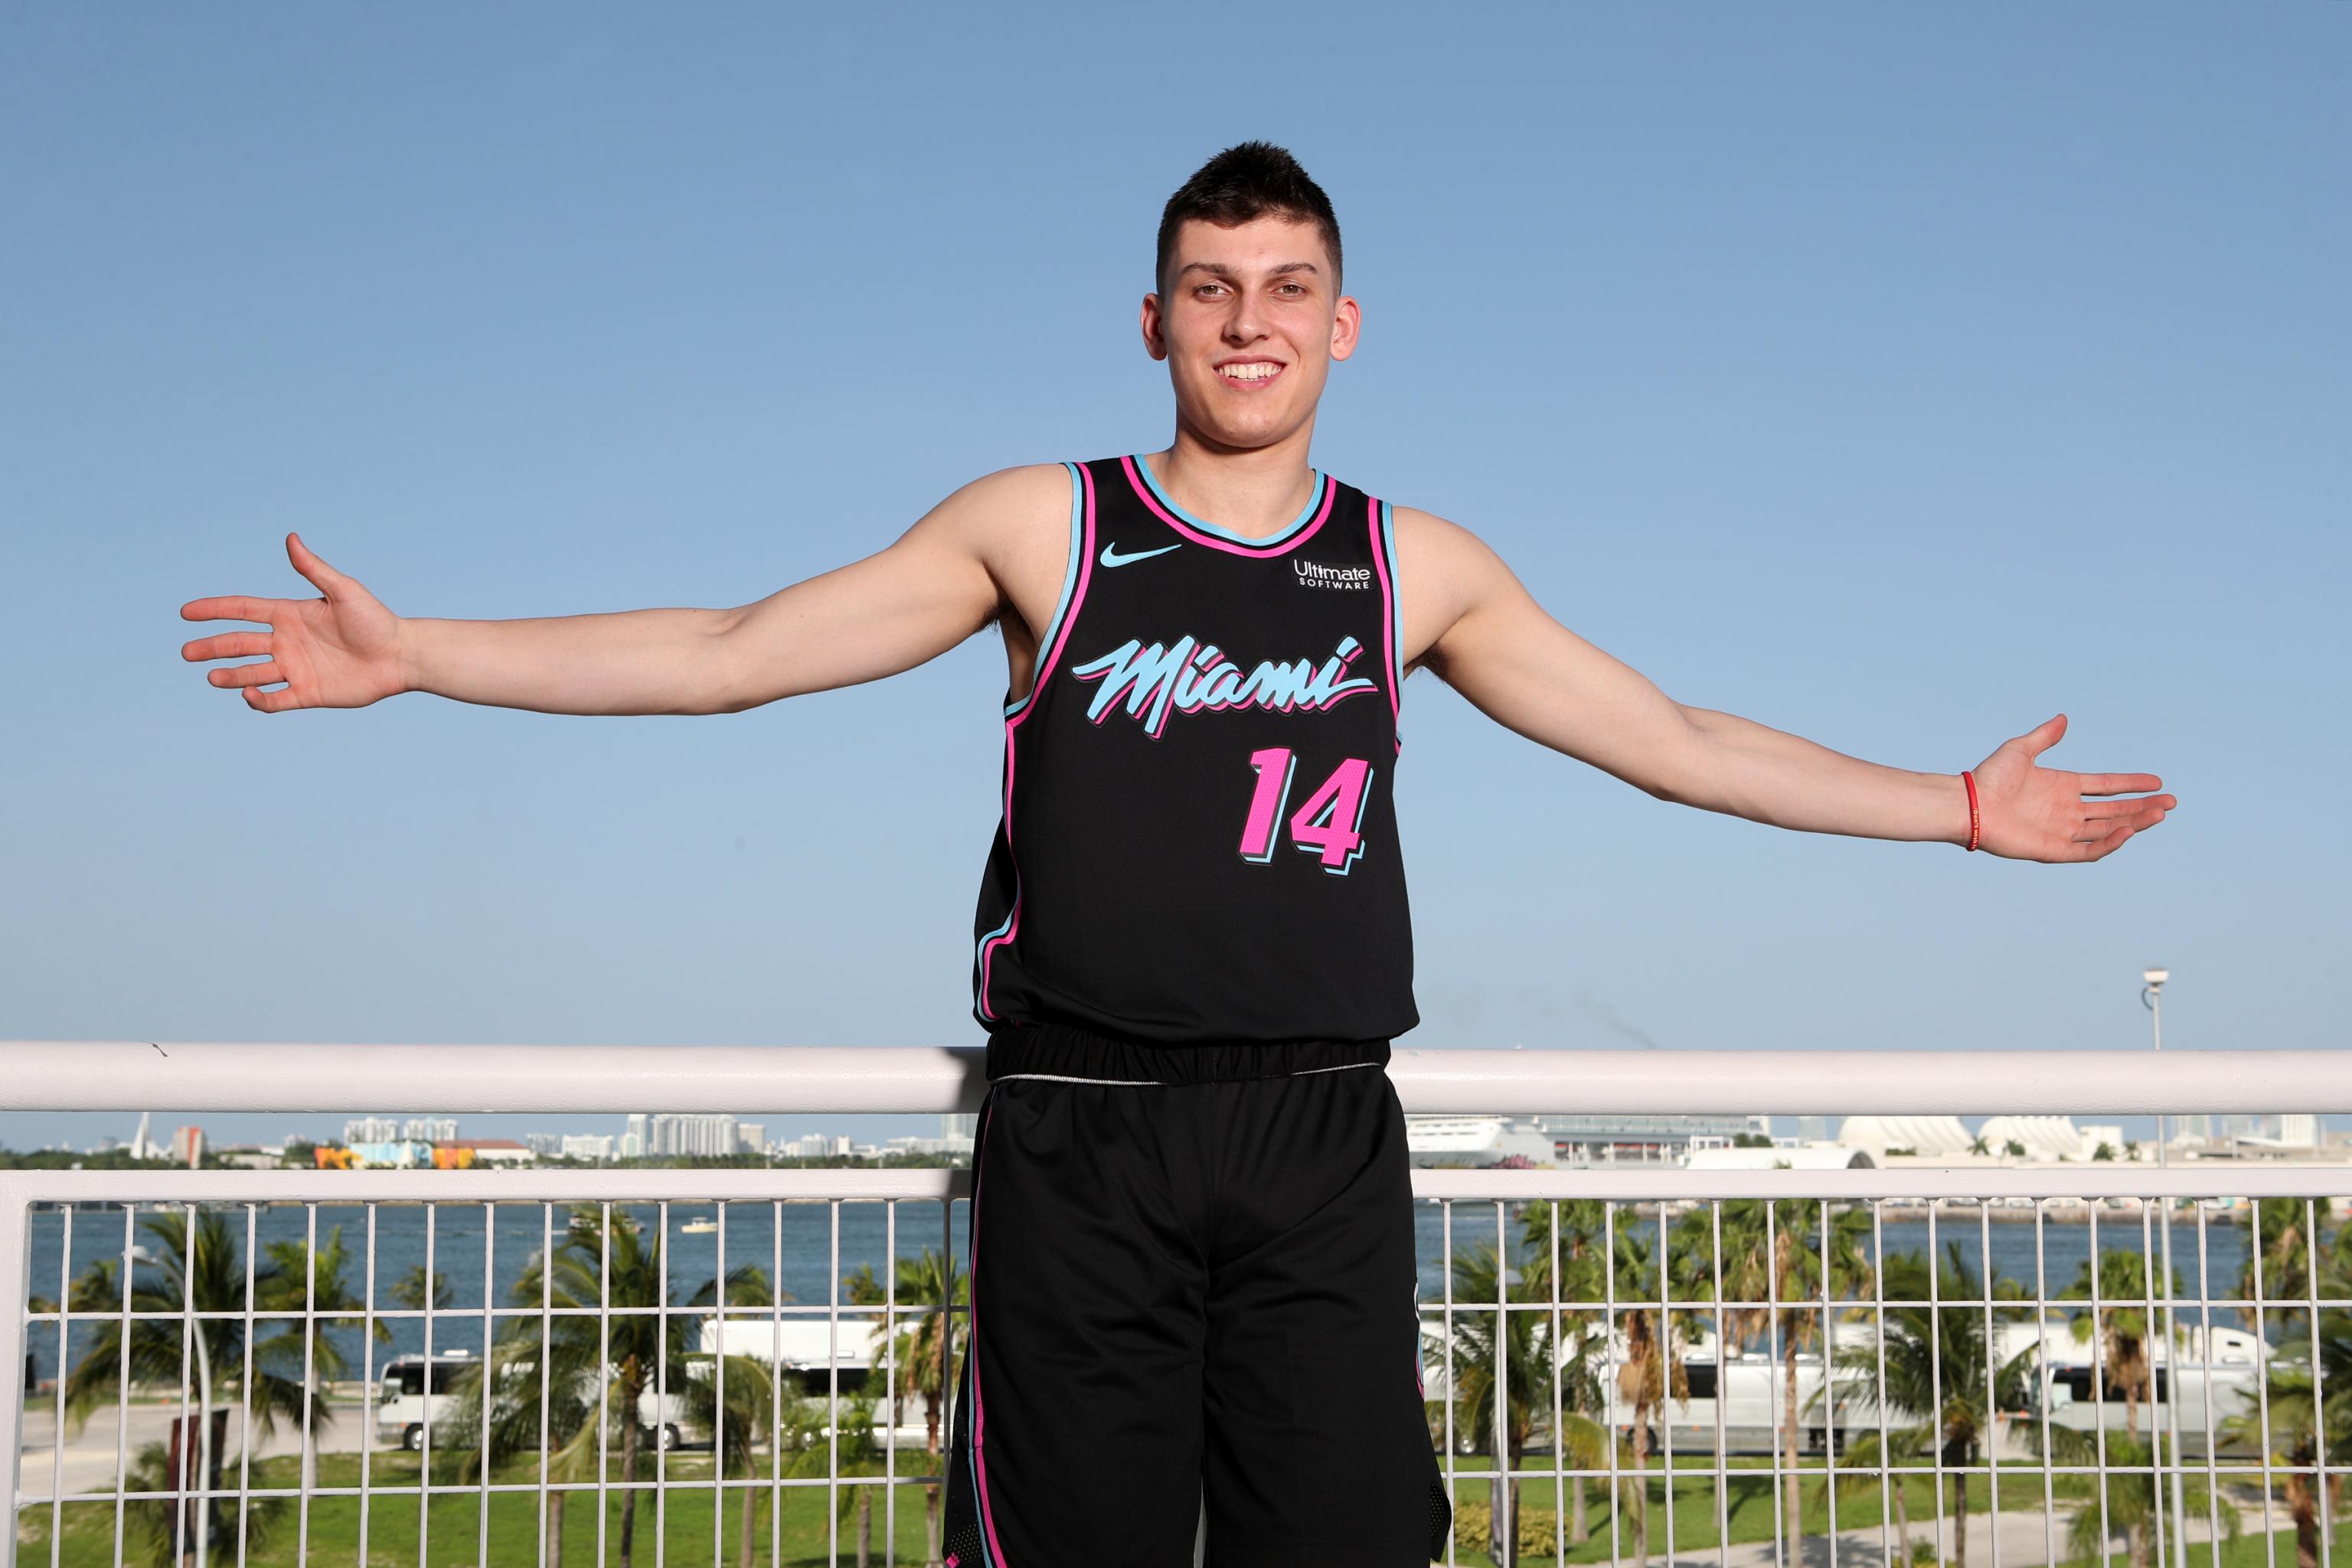 Tyler Herro looks like a home-run draft pick for the Miami Heat 